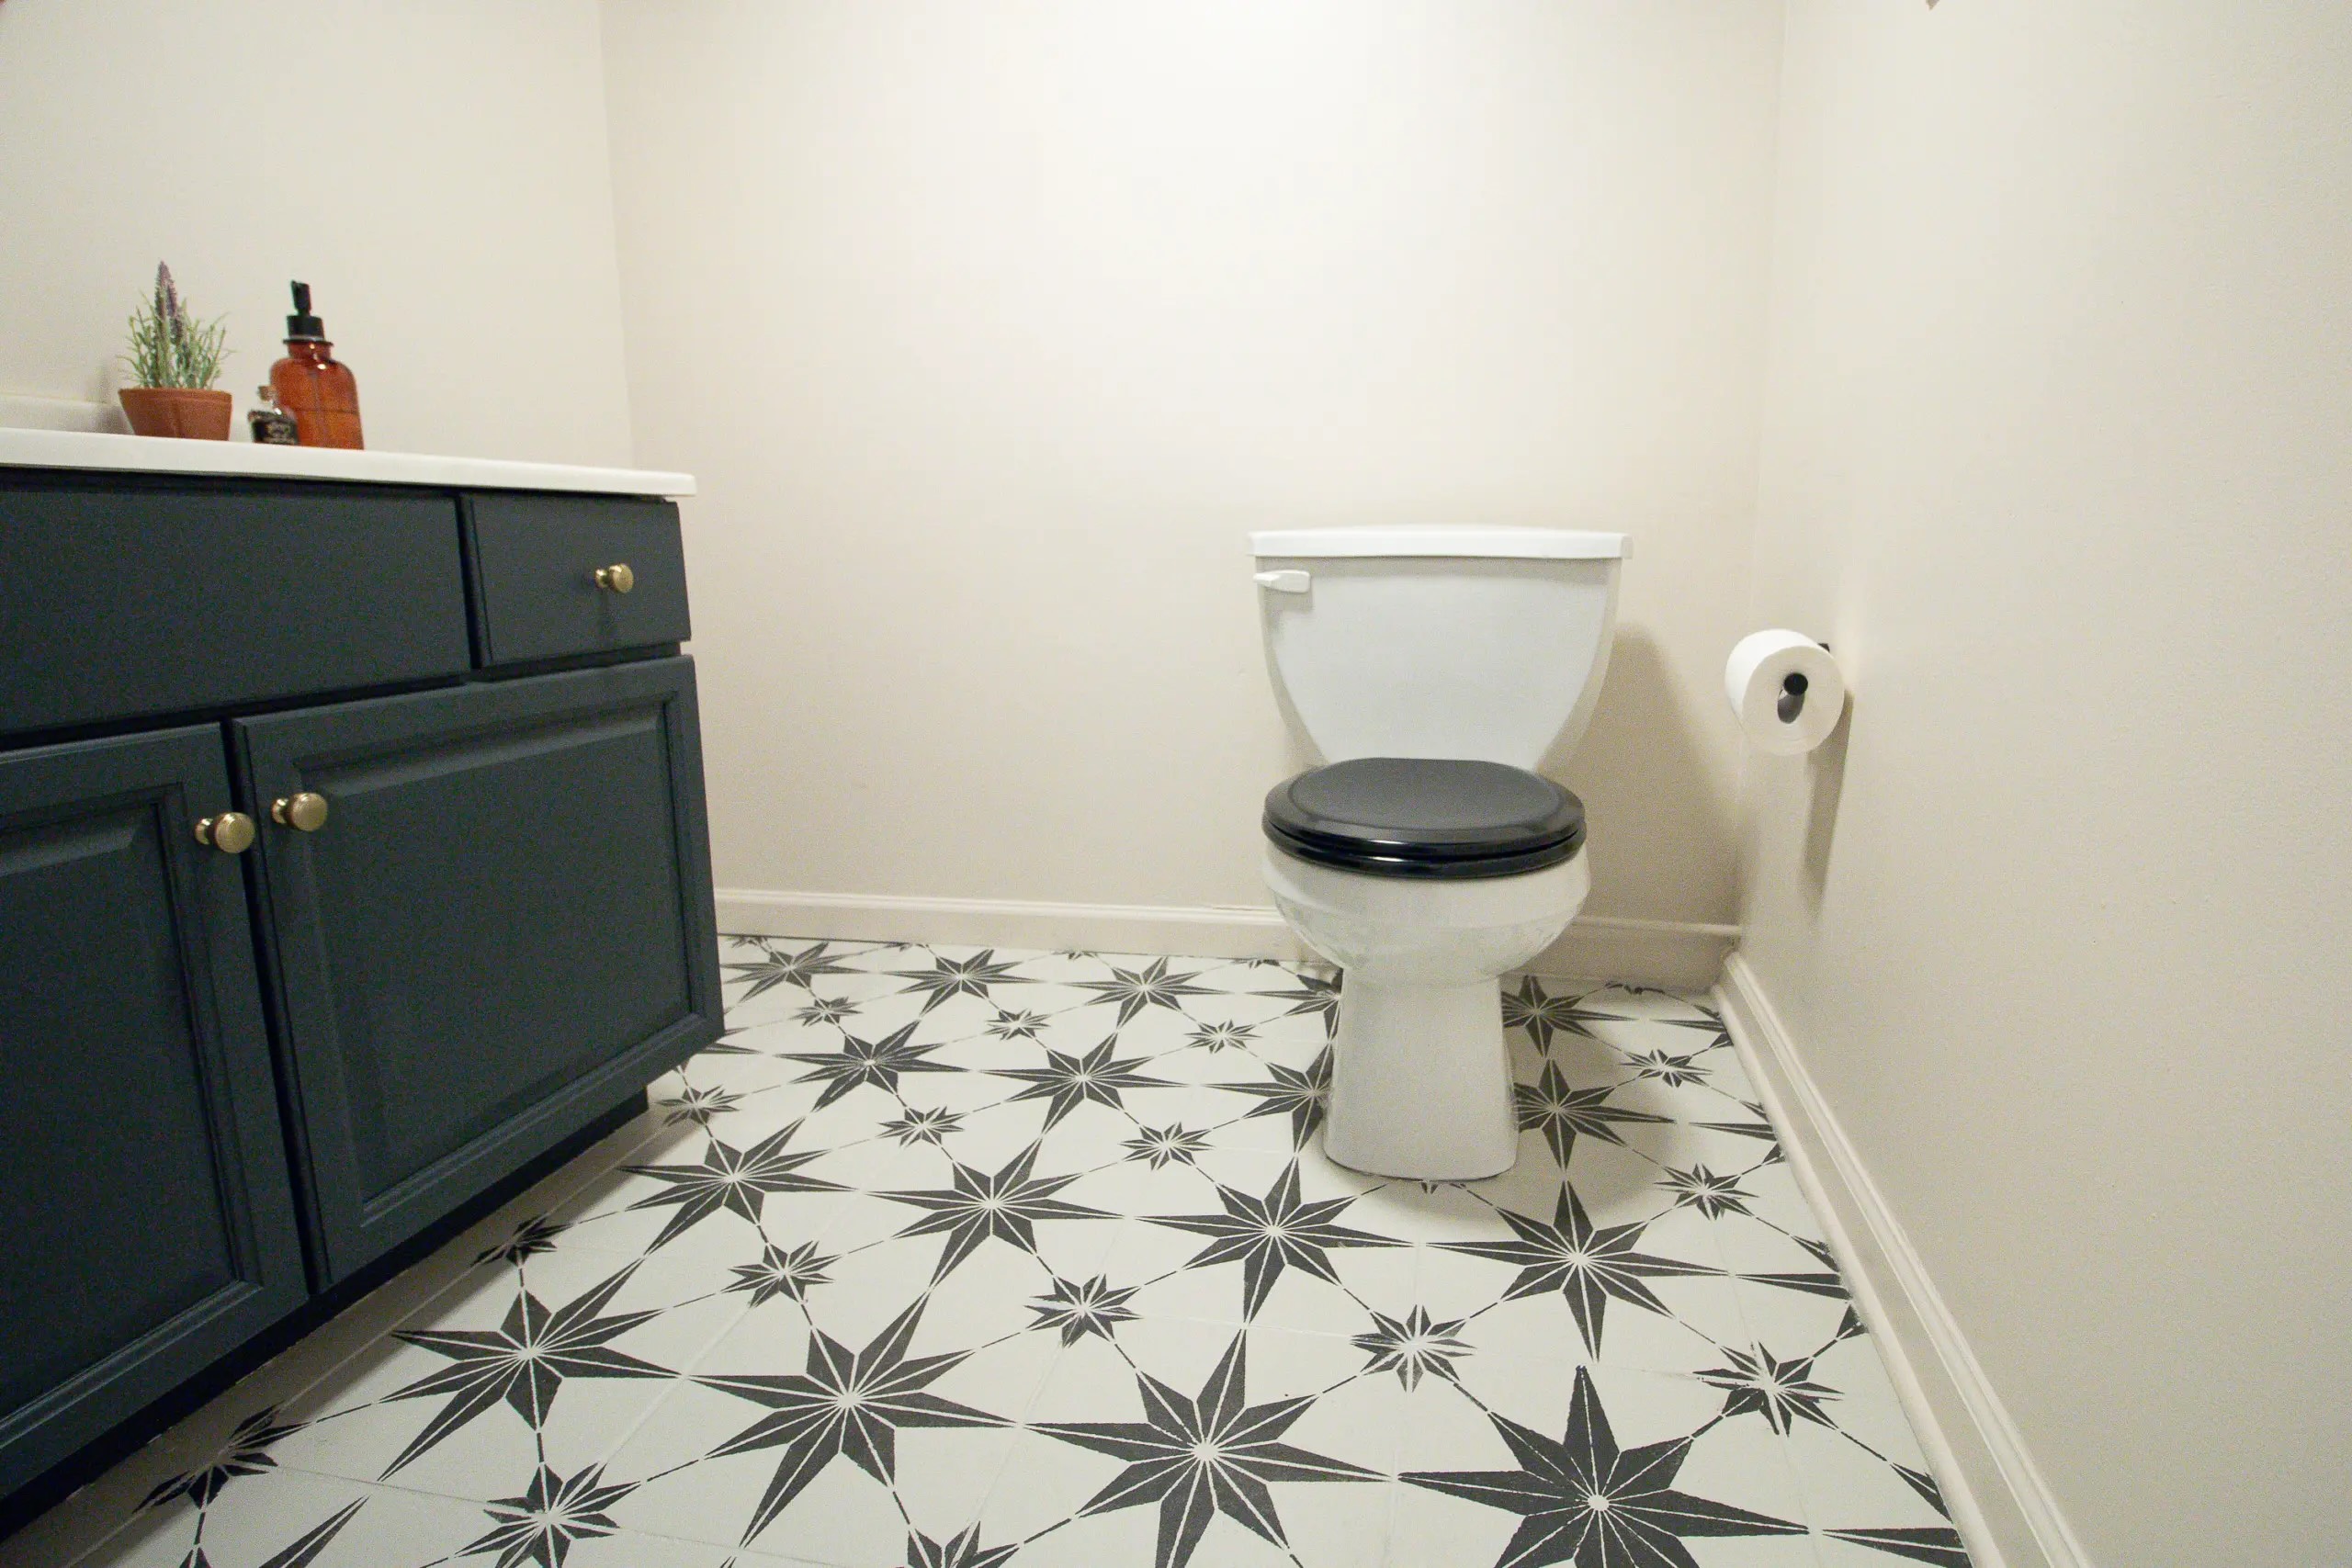 Star Tile Bathroom Floor